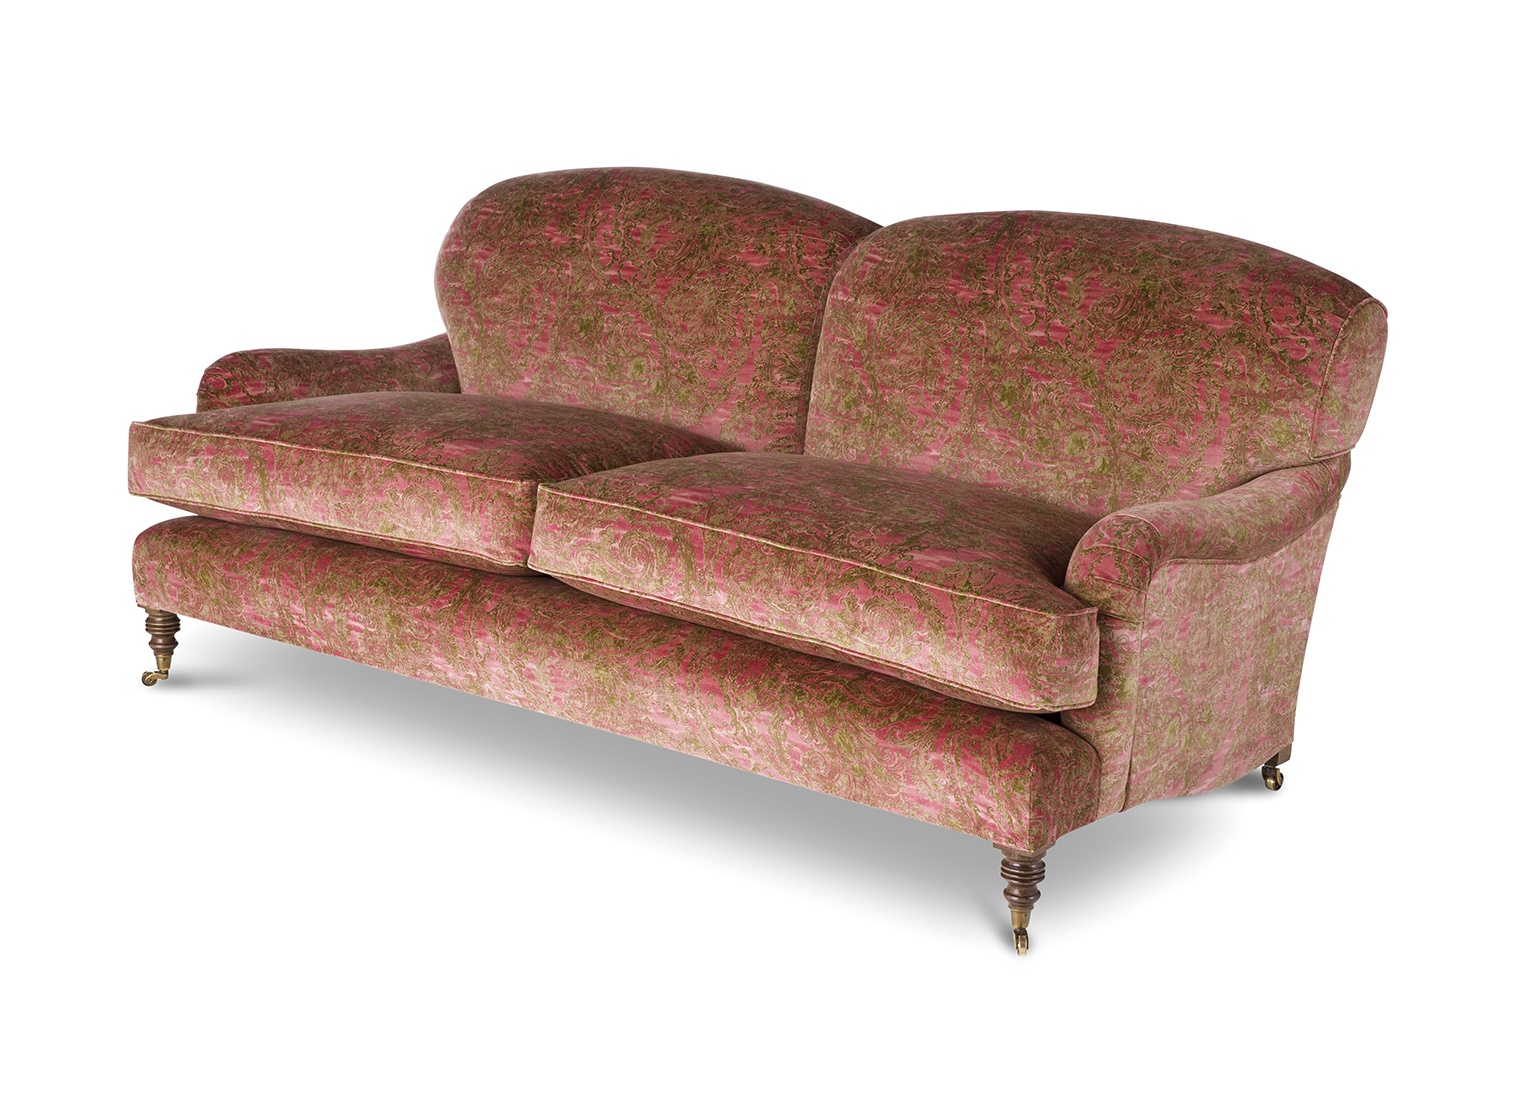 Howard 2.5 seater sofa in Balthazar - Venetian red - Beaumont & Fletcher